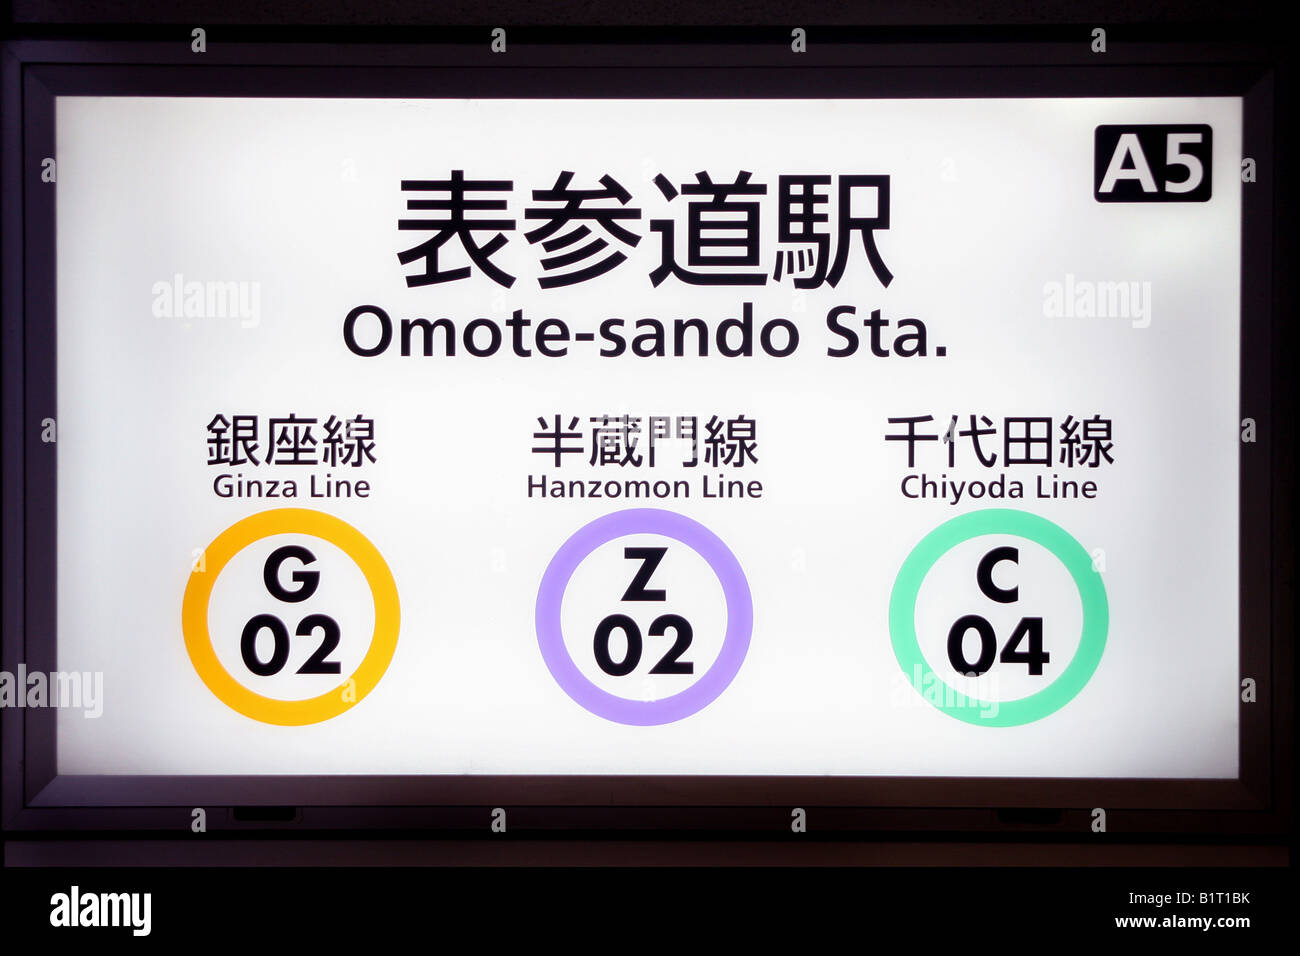 Omotesando Subway Sign Tokyo Japan Stock Photo